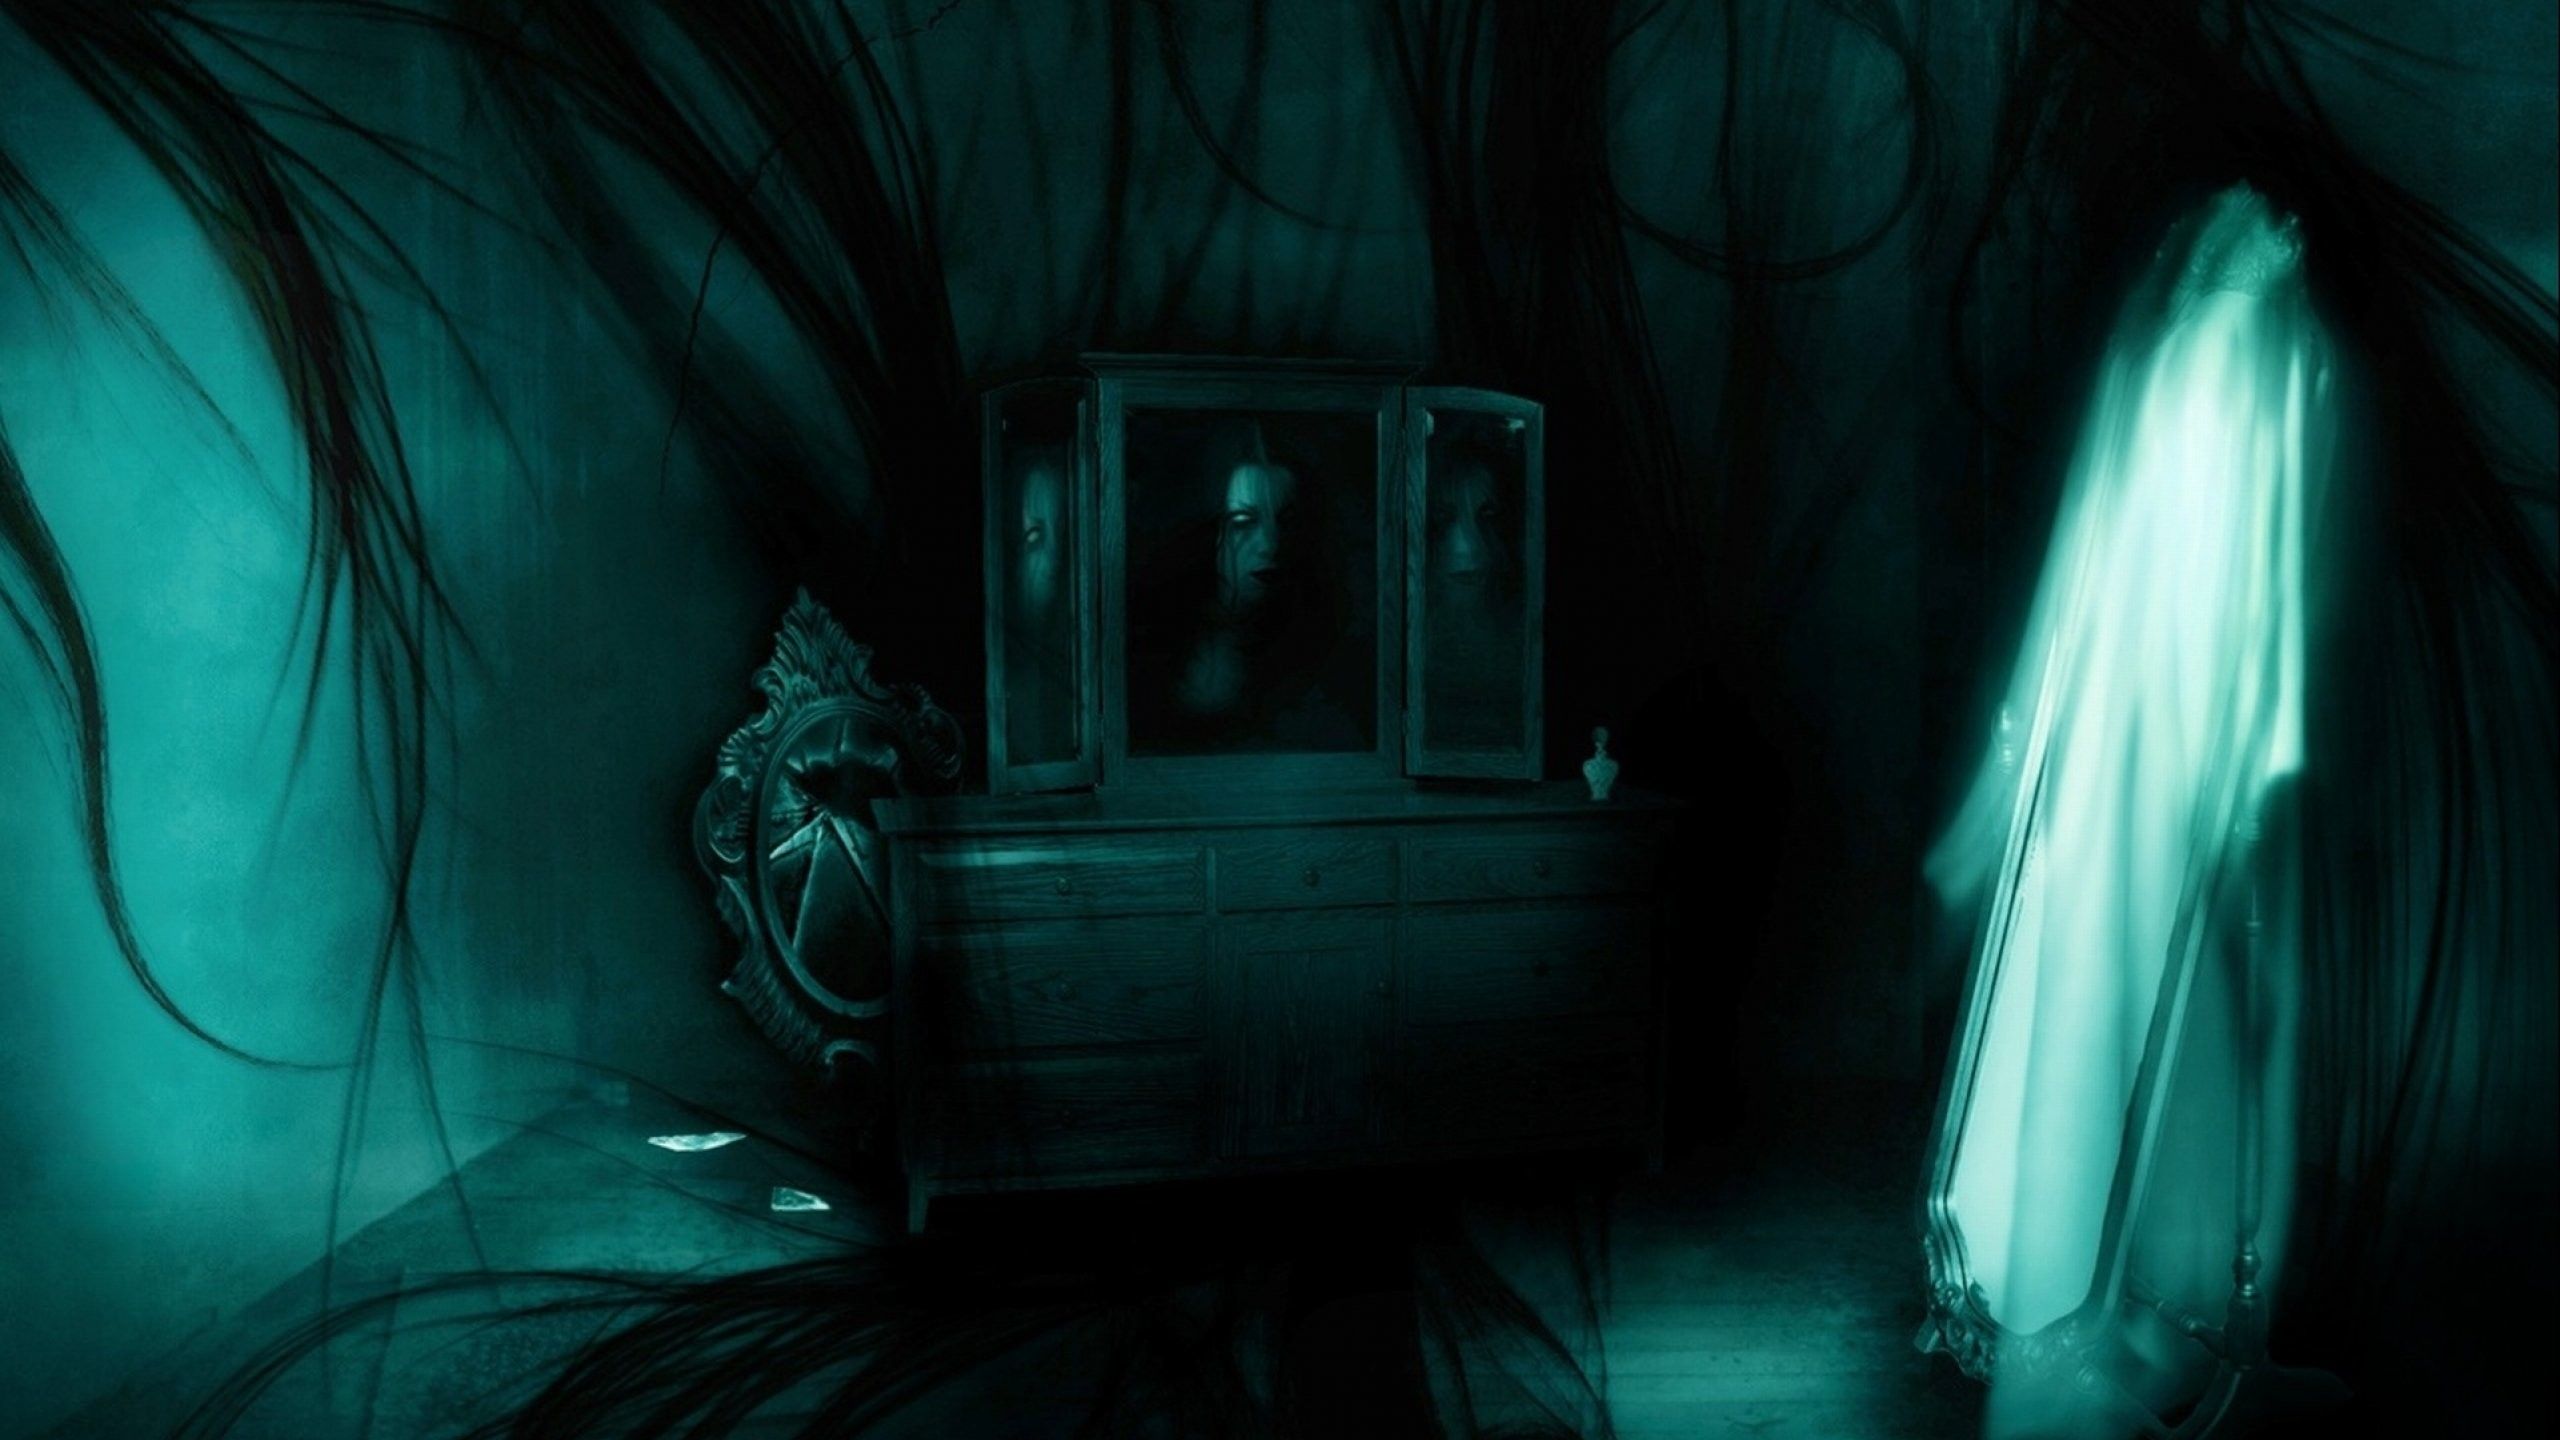 Dark Ghost Fantasy Art Artwork Horror Spooky Creepy Halloween Gothic Wallpaper (2560Ã—1440). Cool Stuff. Creepy Ghost, 3D Wallpaper